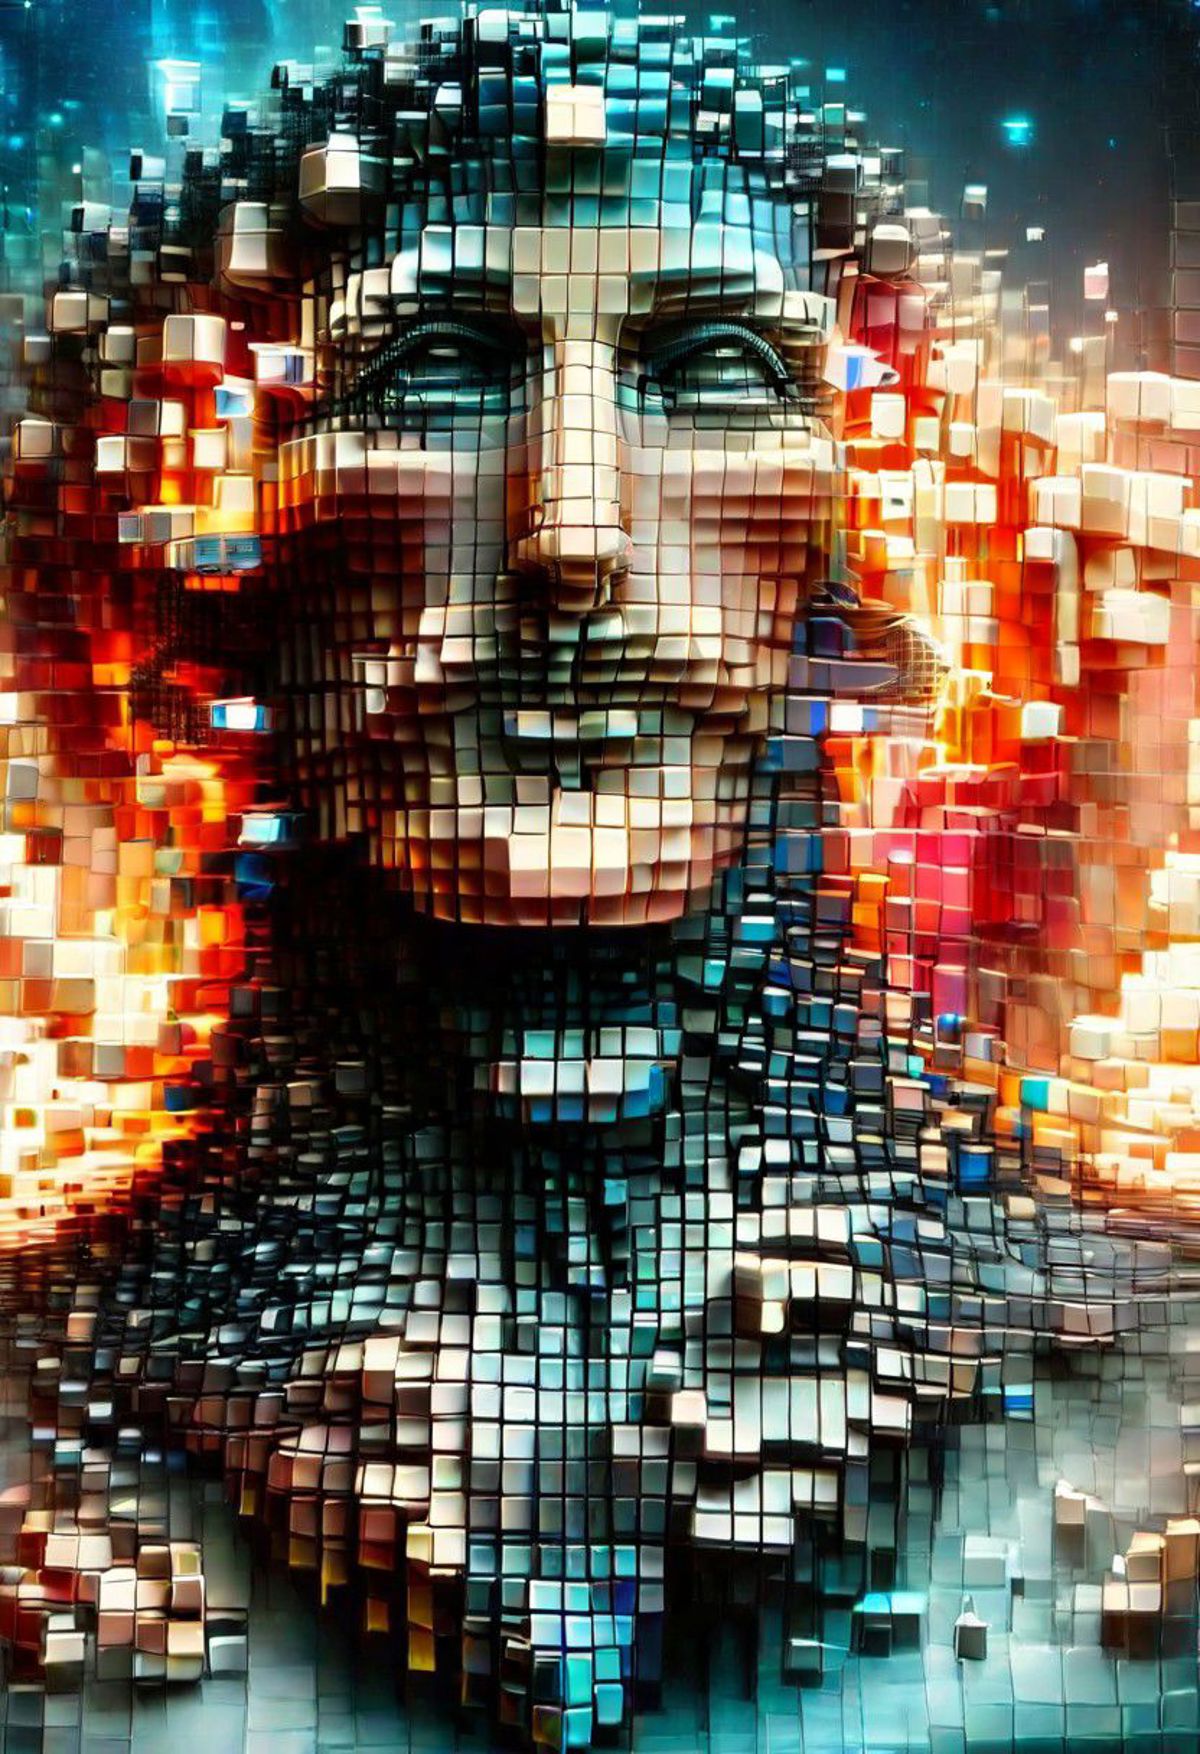 AI model image by martineschoyez